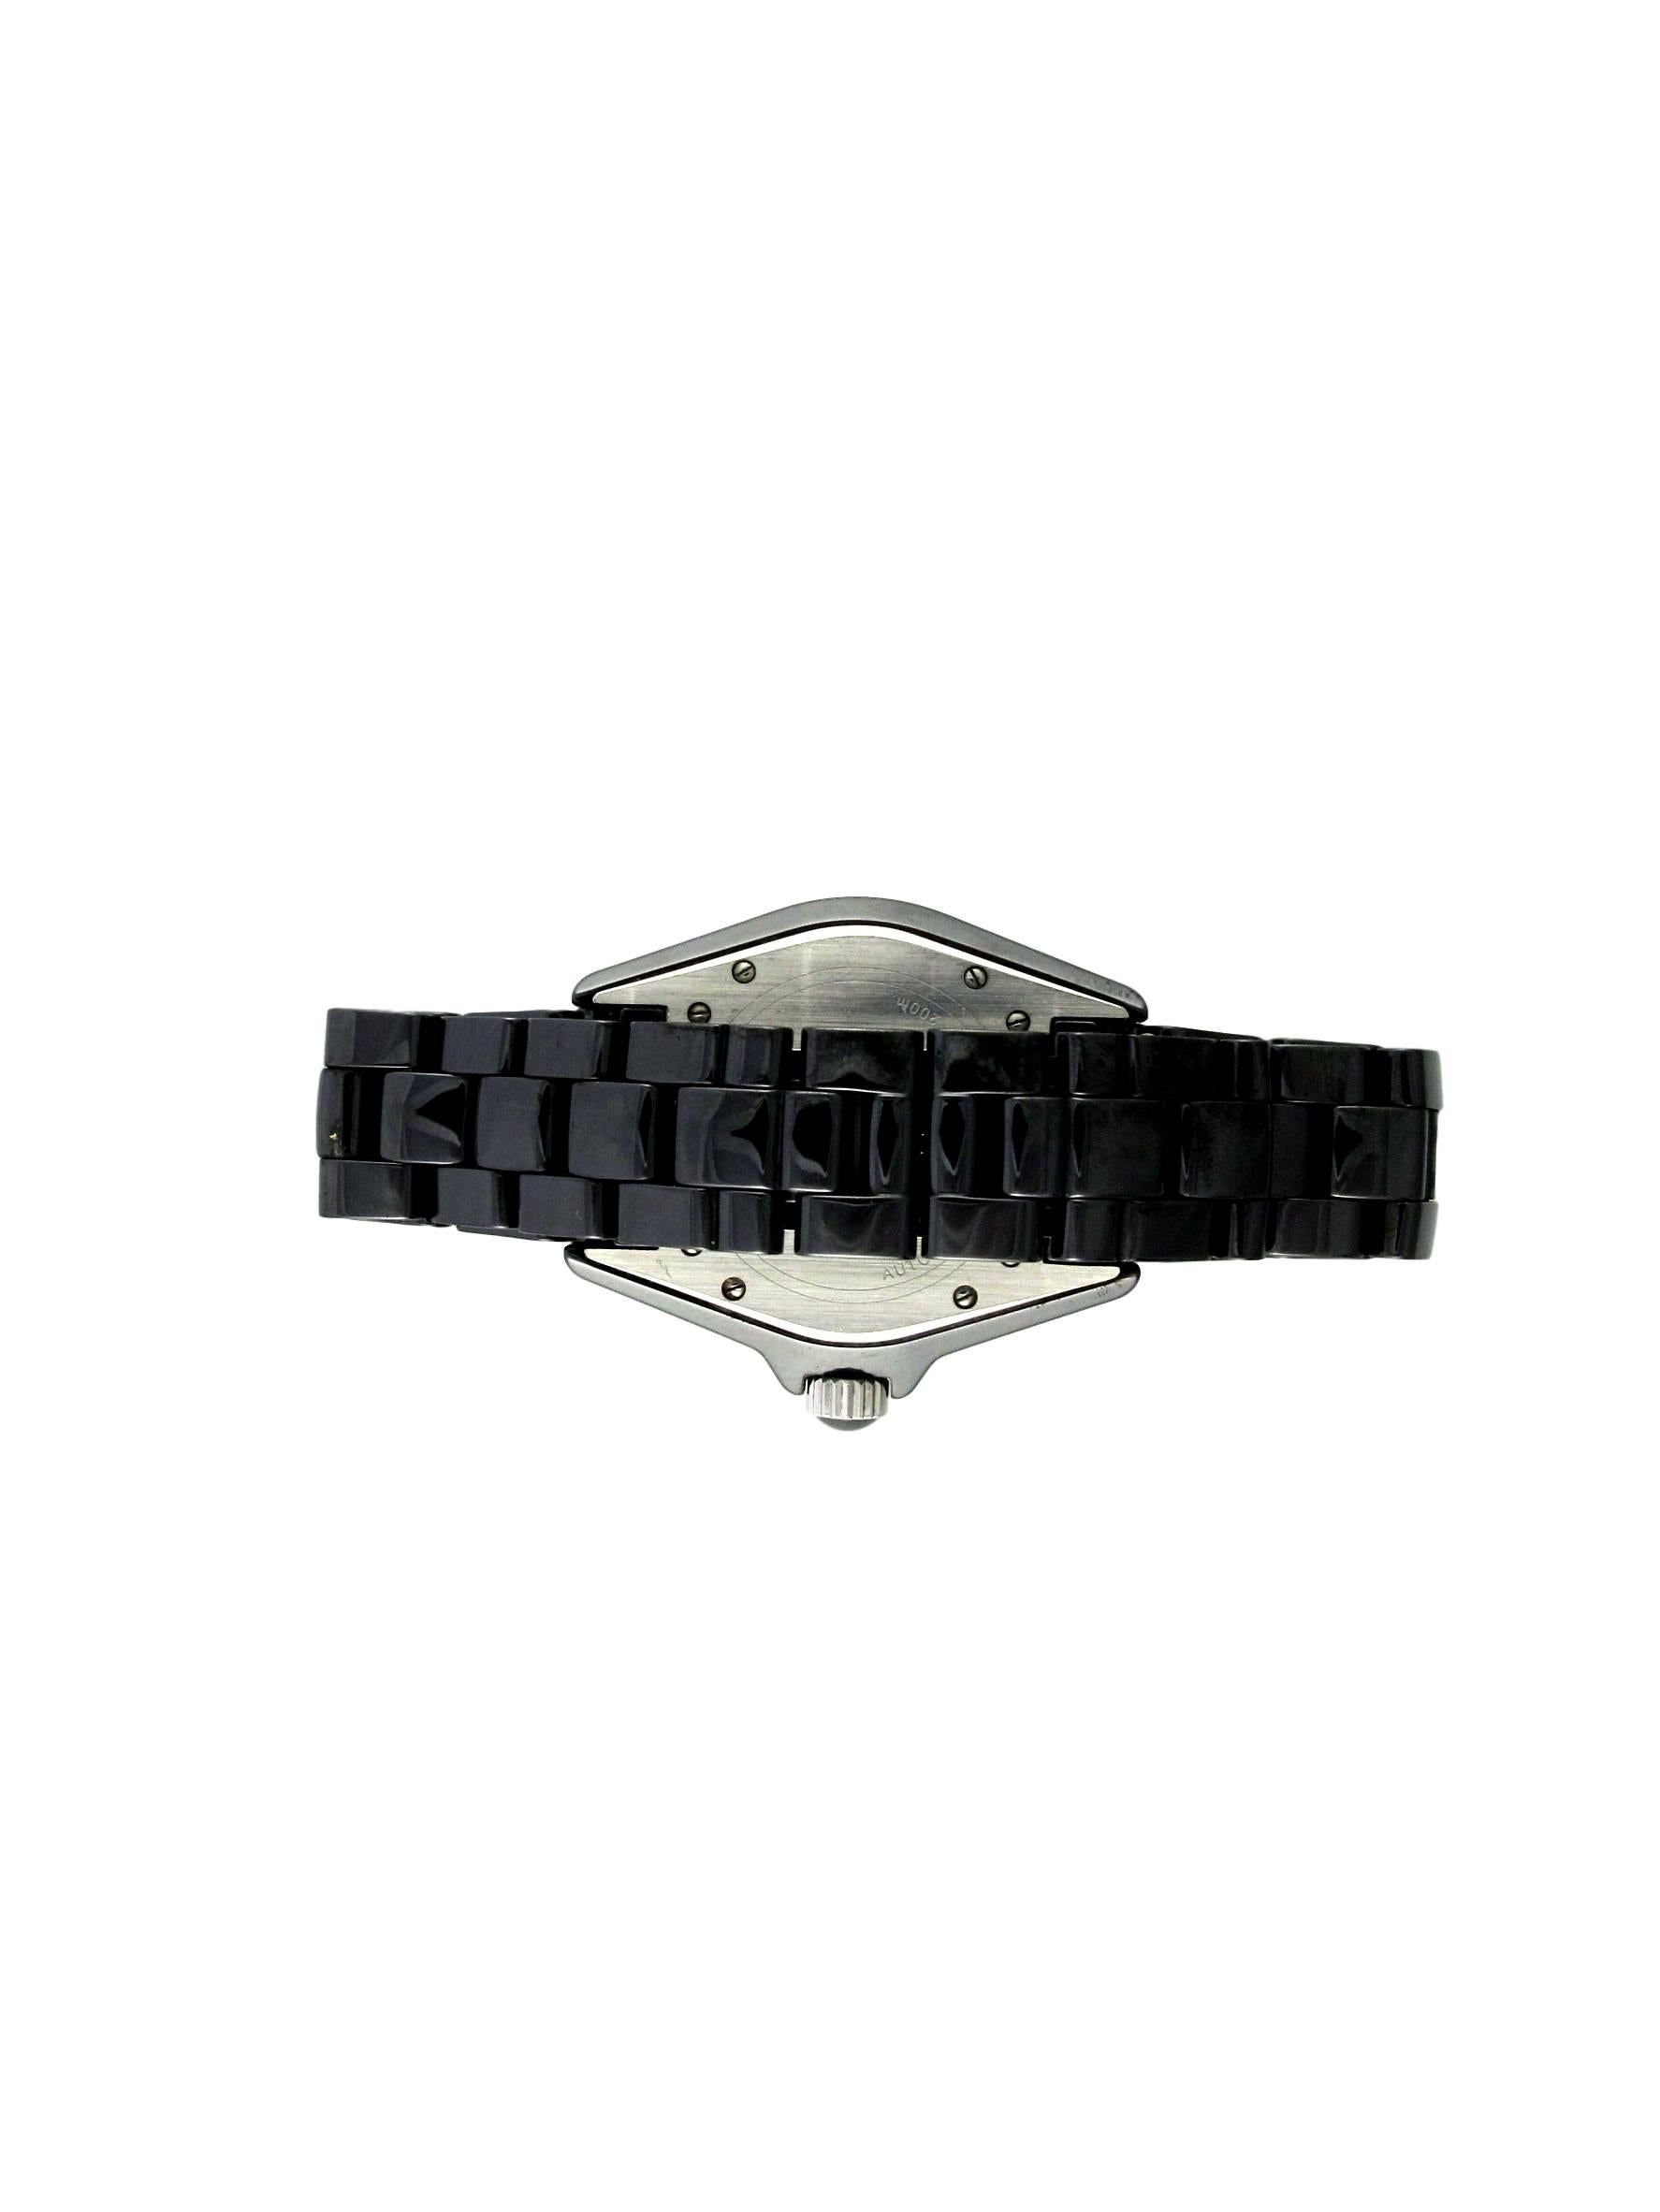 Contemporary Diamond Black Ceramics Automatic Large J12 Chanel Watch